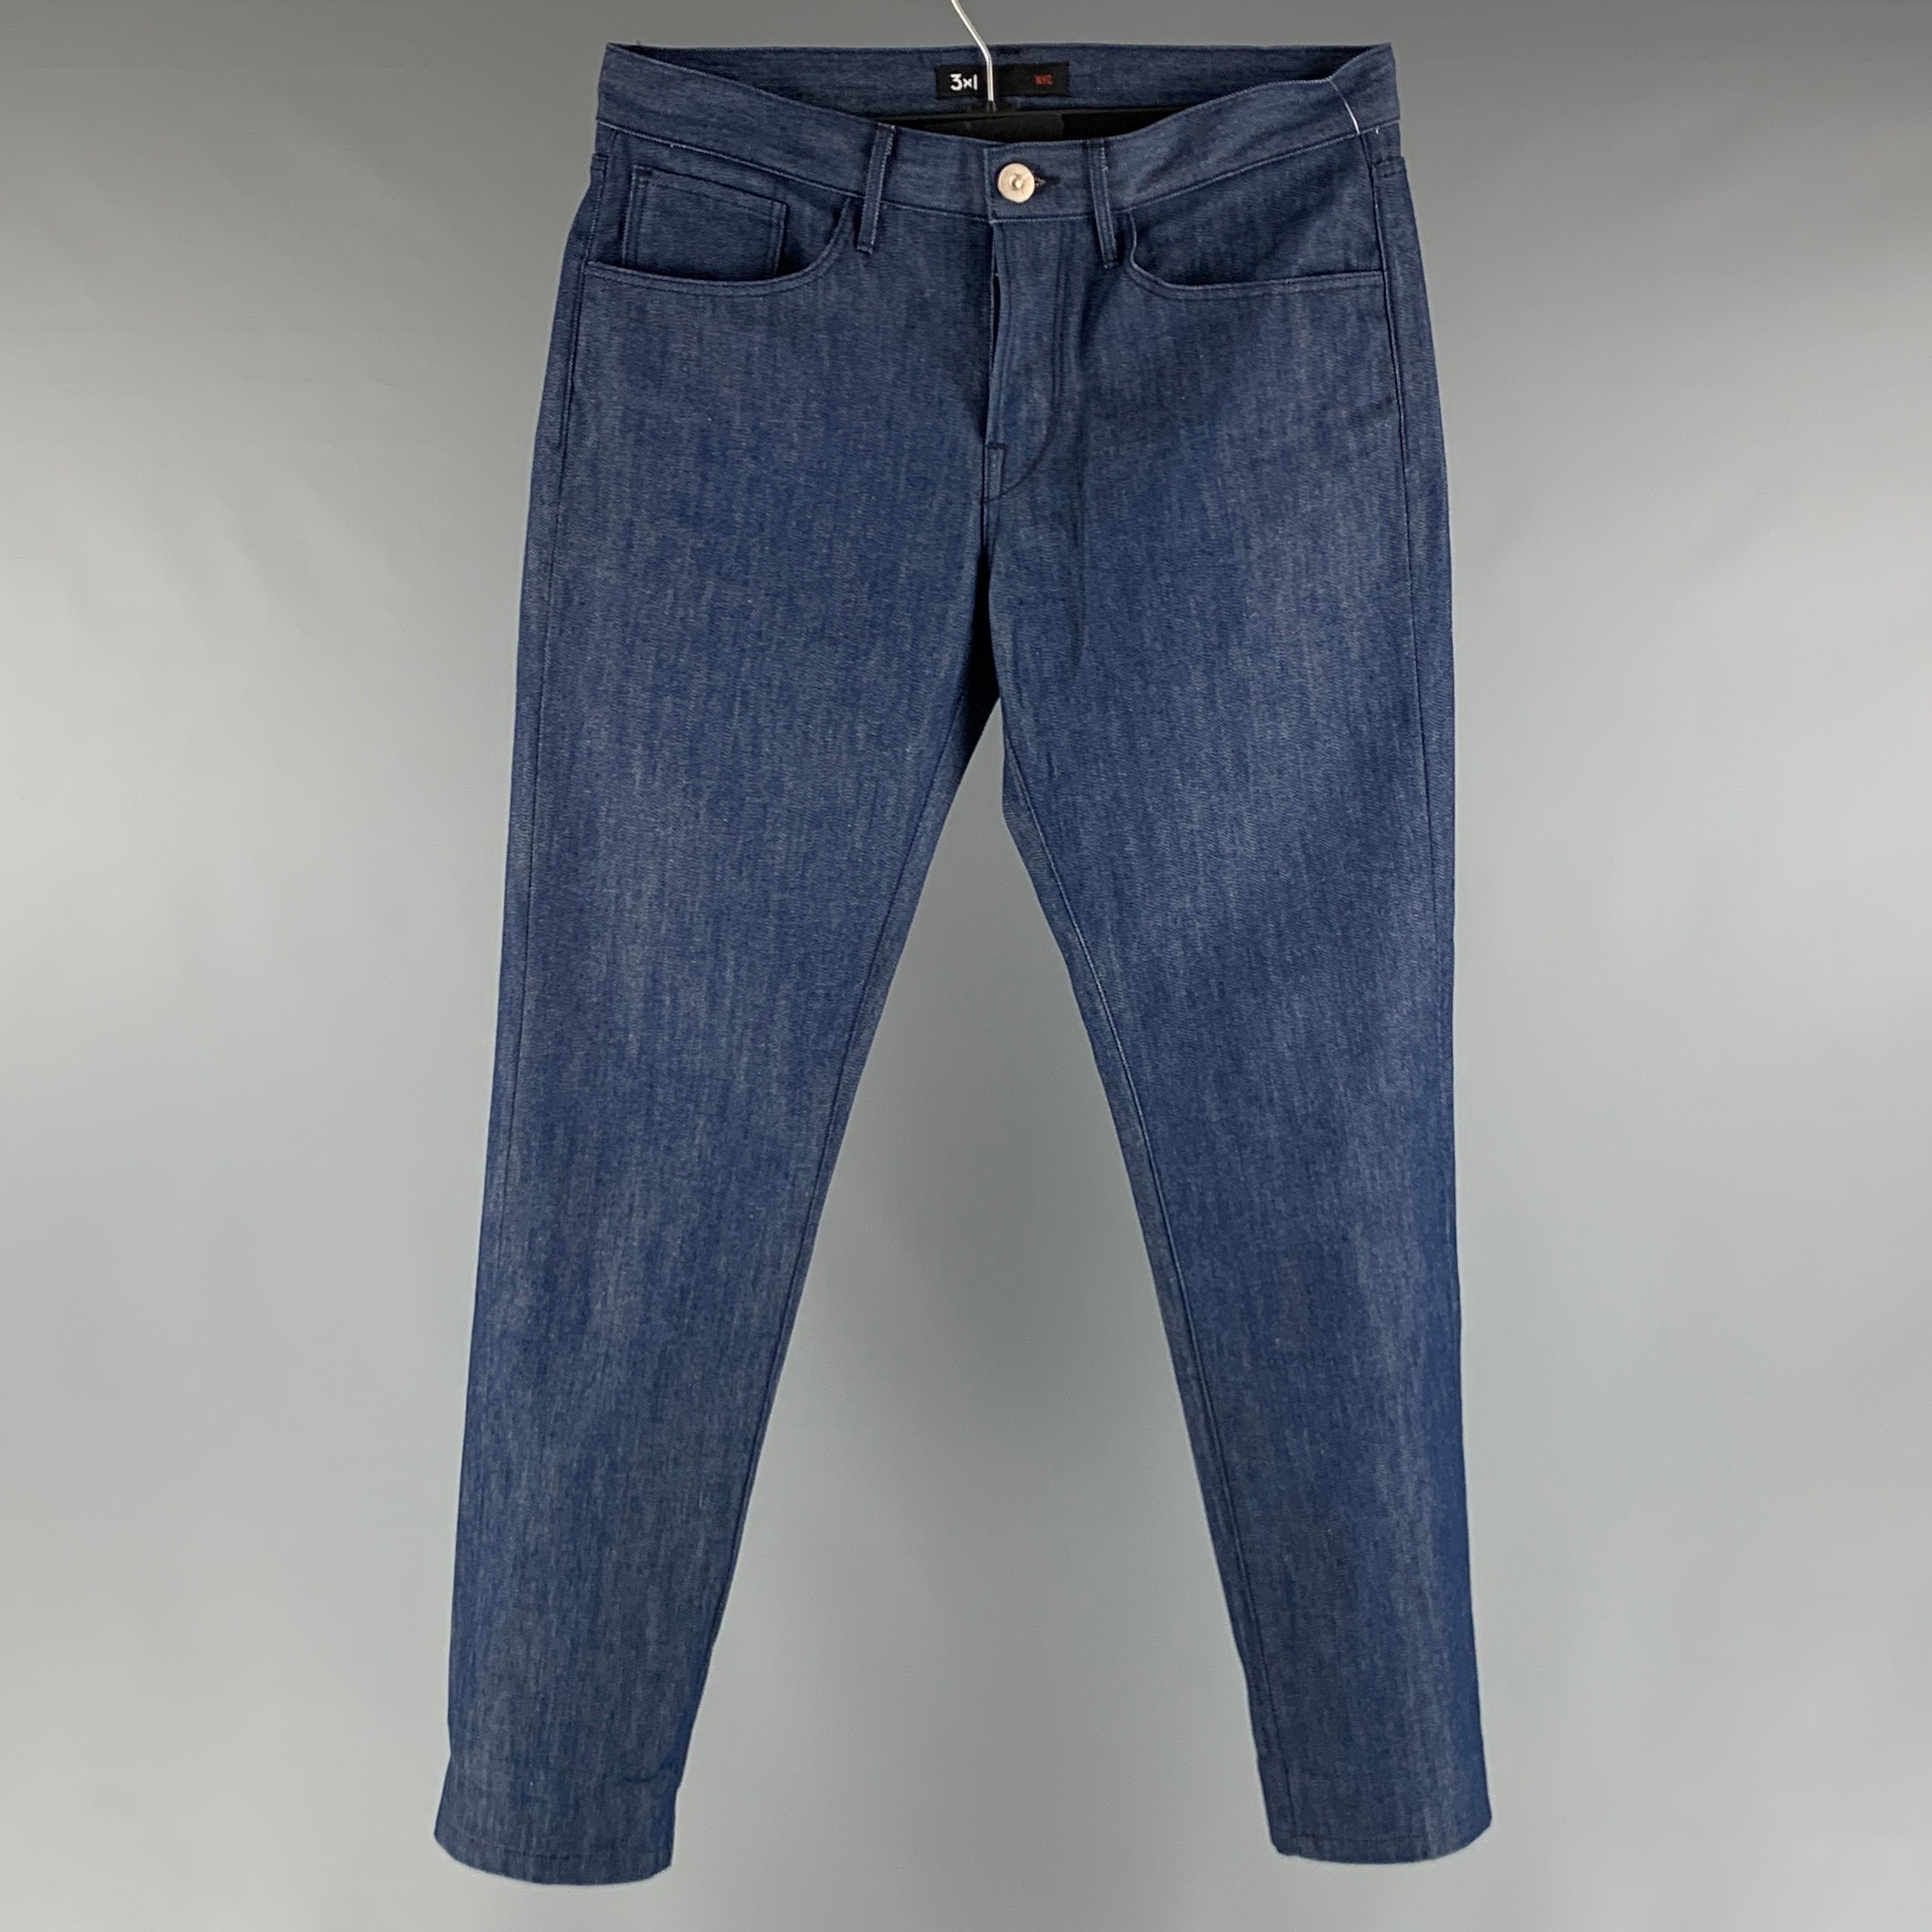 Buy 90s Prada Vintage Jeans/design Jeans Prada/blue Cotton Jeans Prada/jeans  Prada/trousers Prada/prada Pants Online in India - Etsy